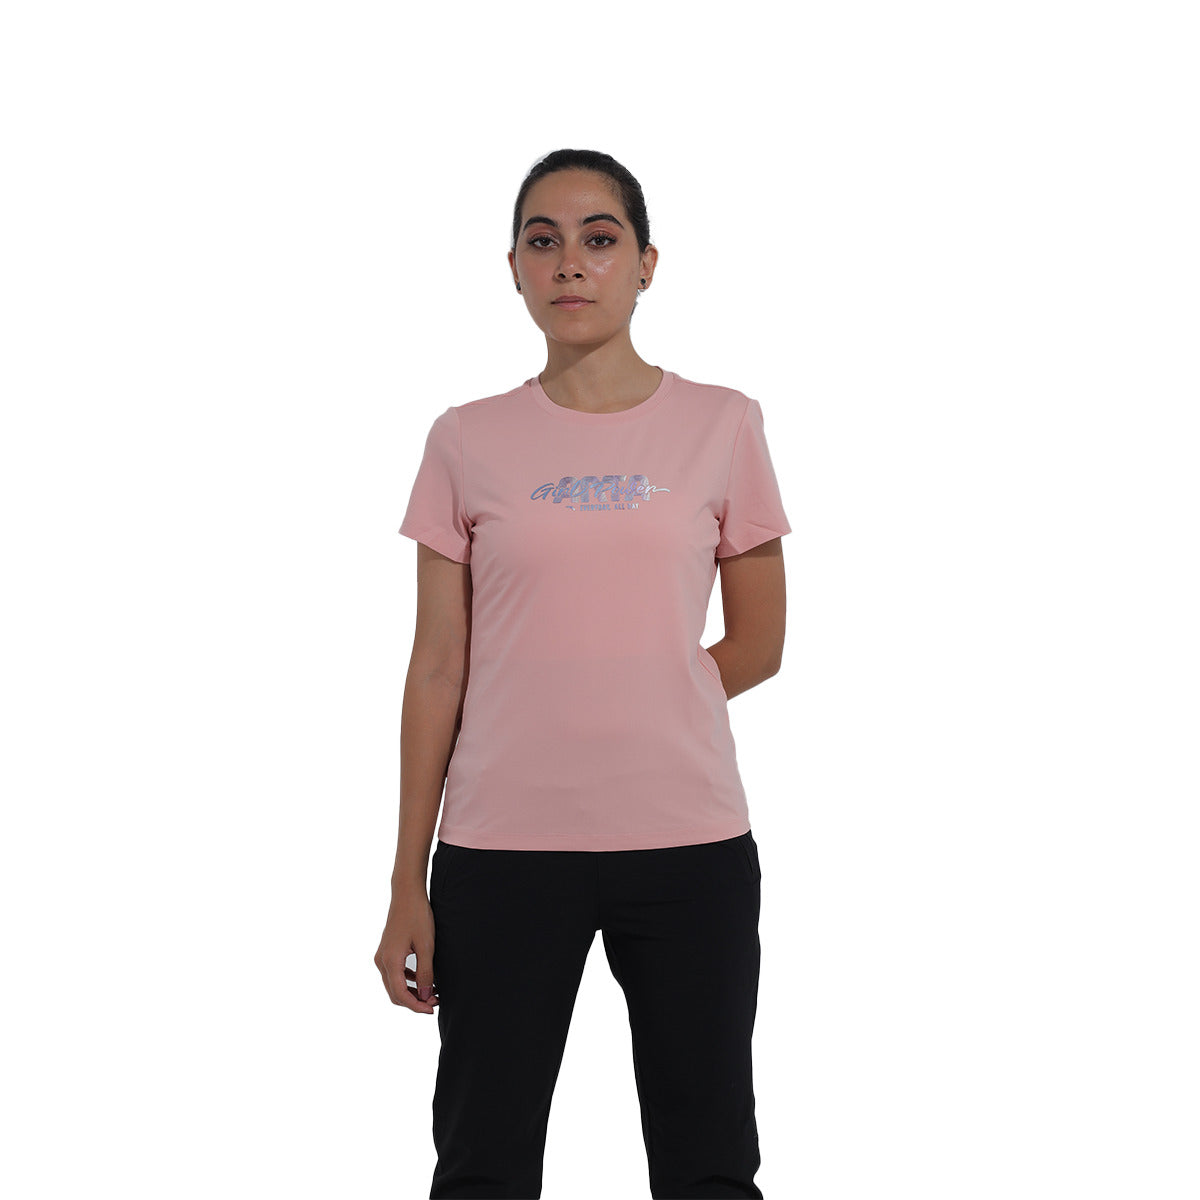 Anta SS Tee Cross Training T-Shirt For Women, Pink White